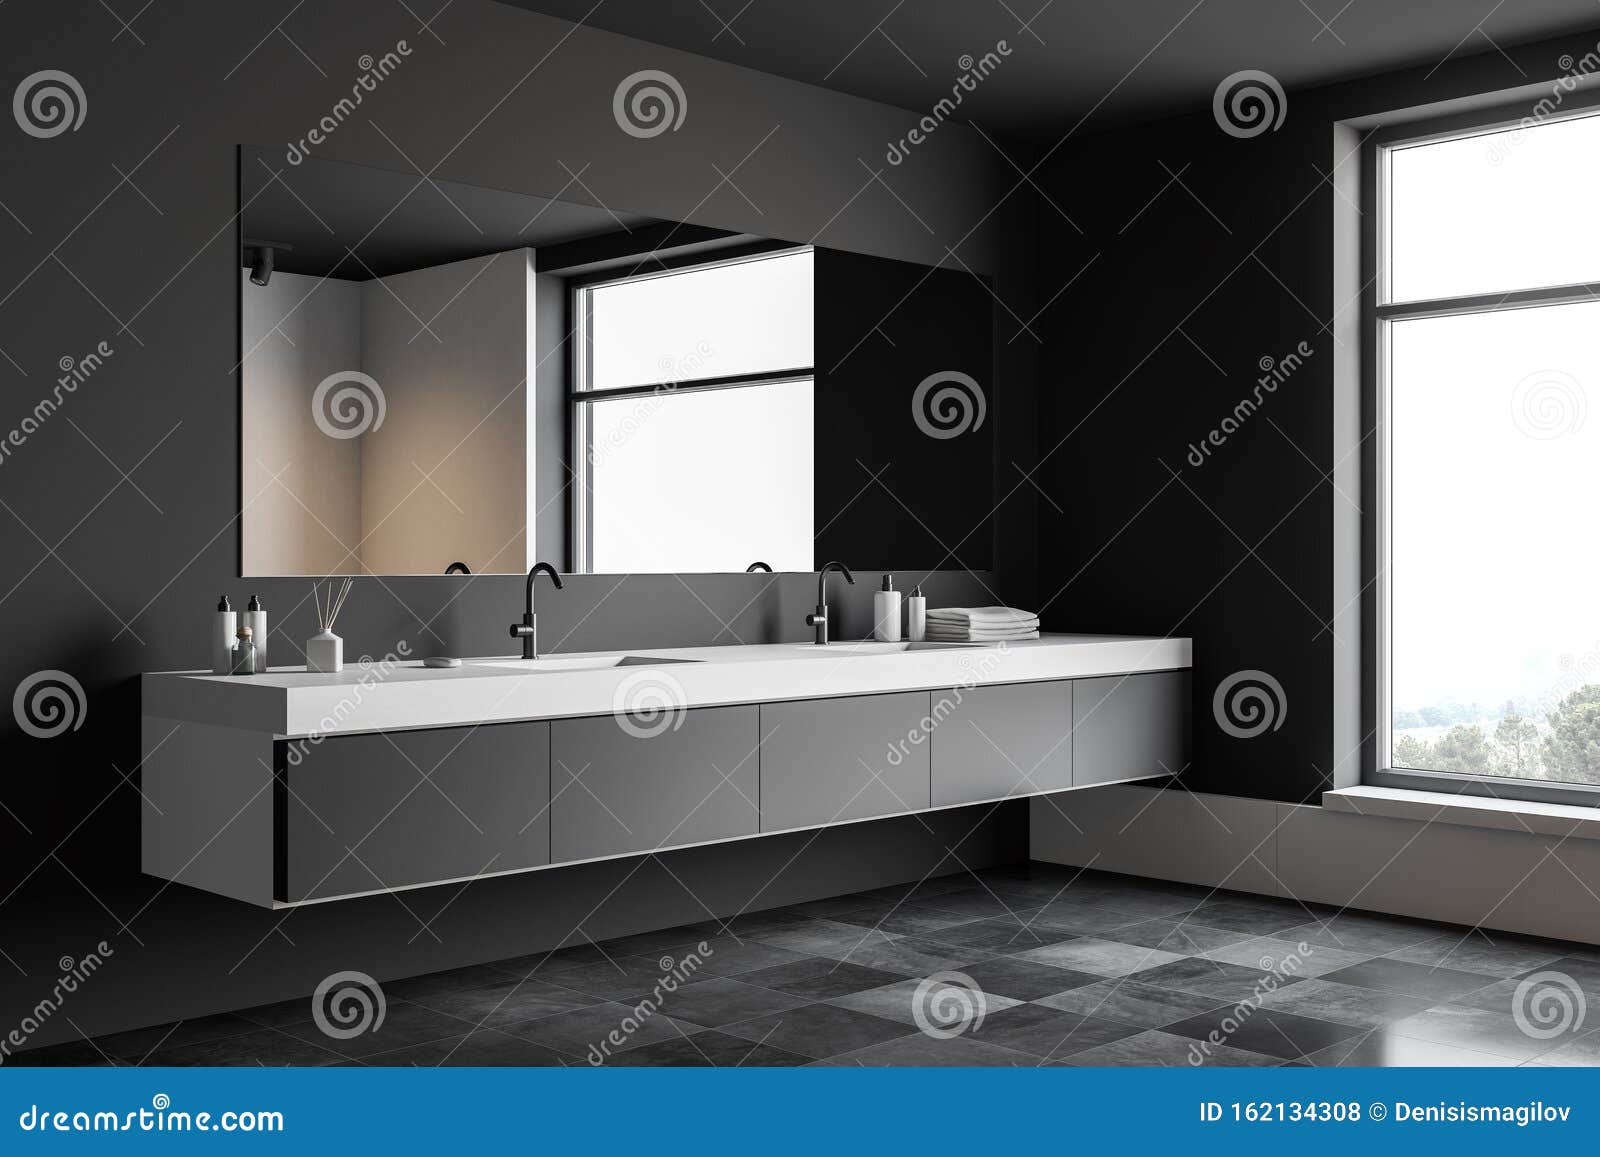 Corner Of Gray Bathroom With Double Sink Stock Illustration